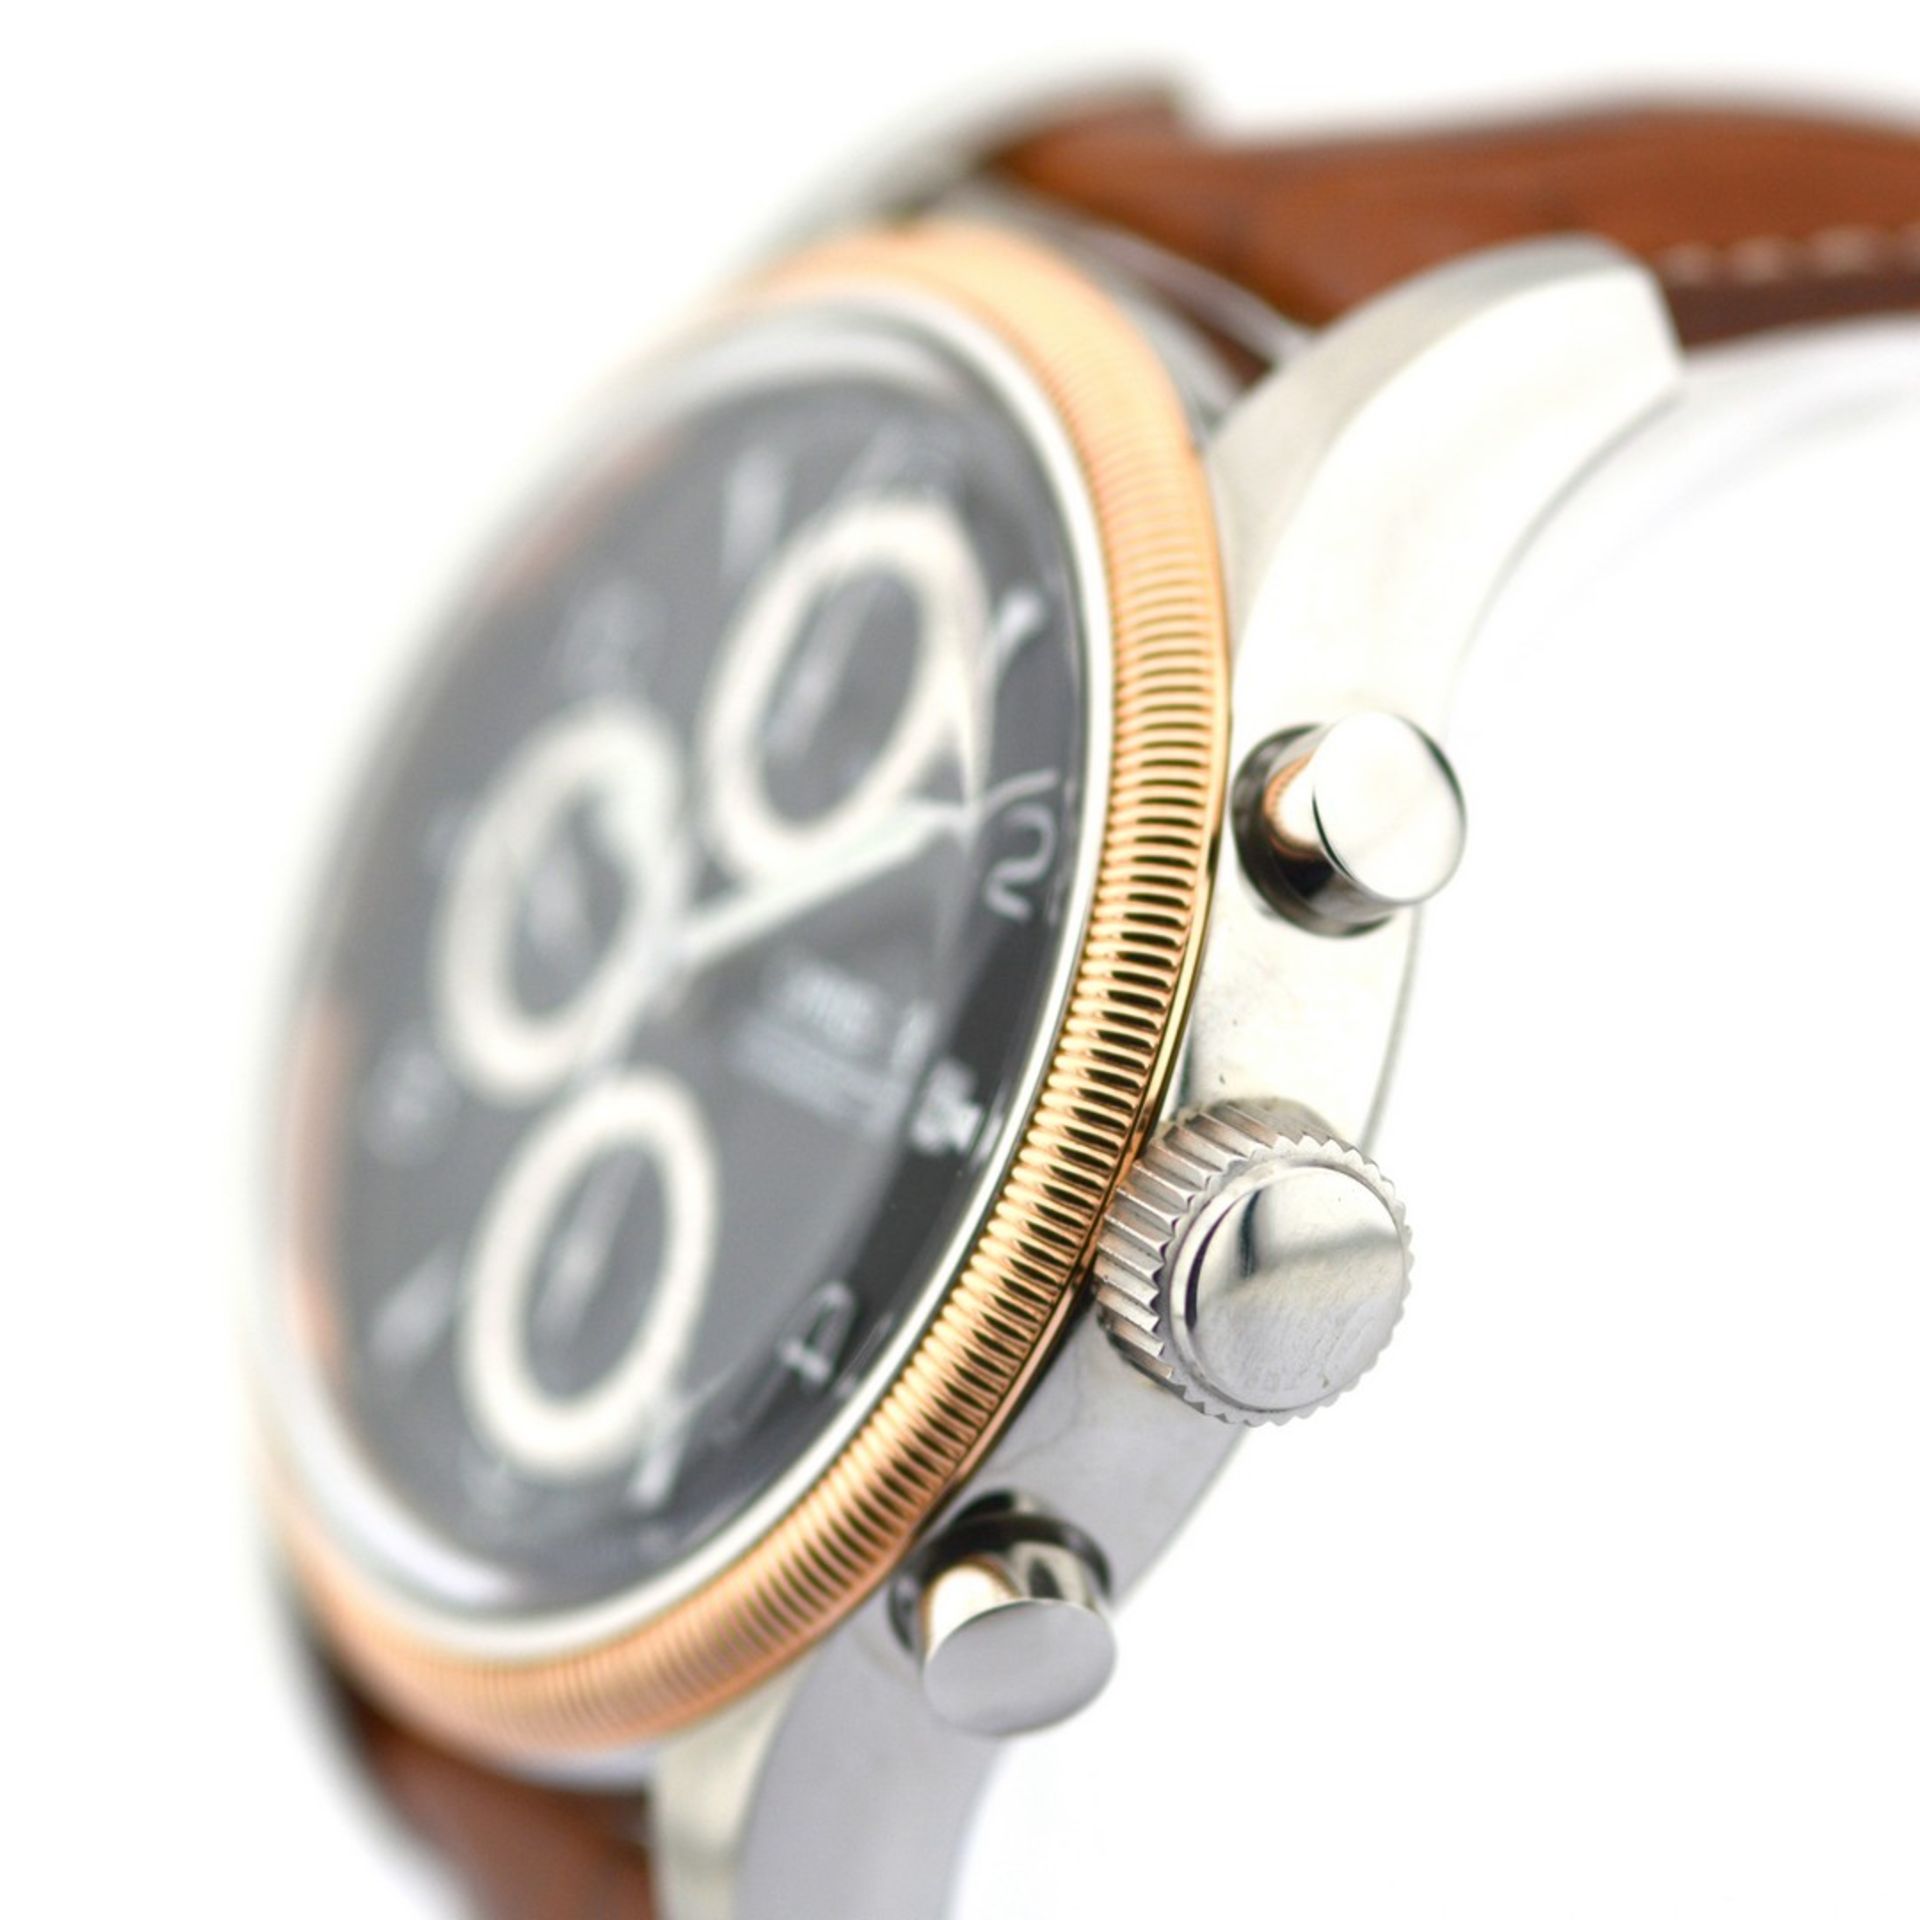 Oris / Big Crown 7567 Chronograph Automatic - Date - Gentlemen's Steel Wristwatch - Image 2 of 7